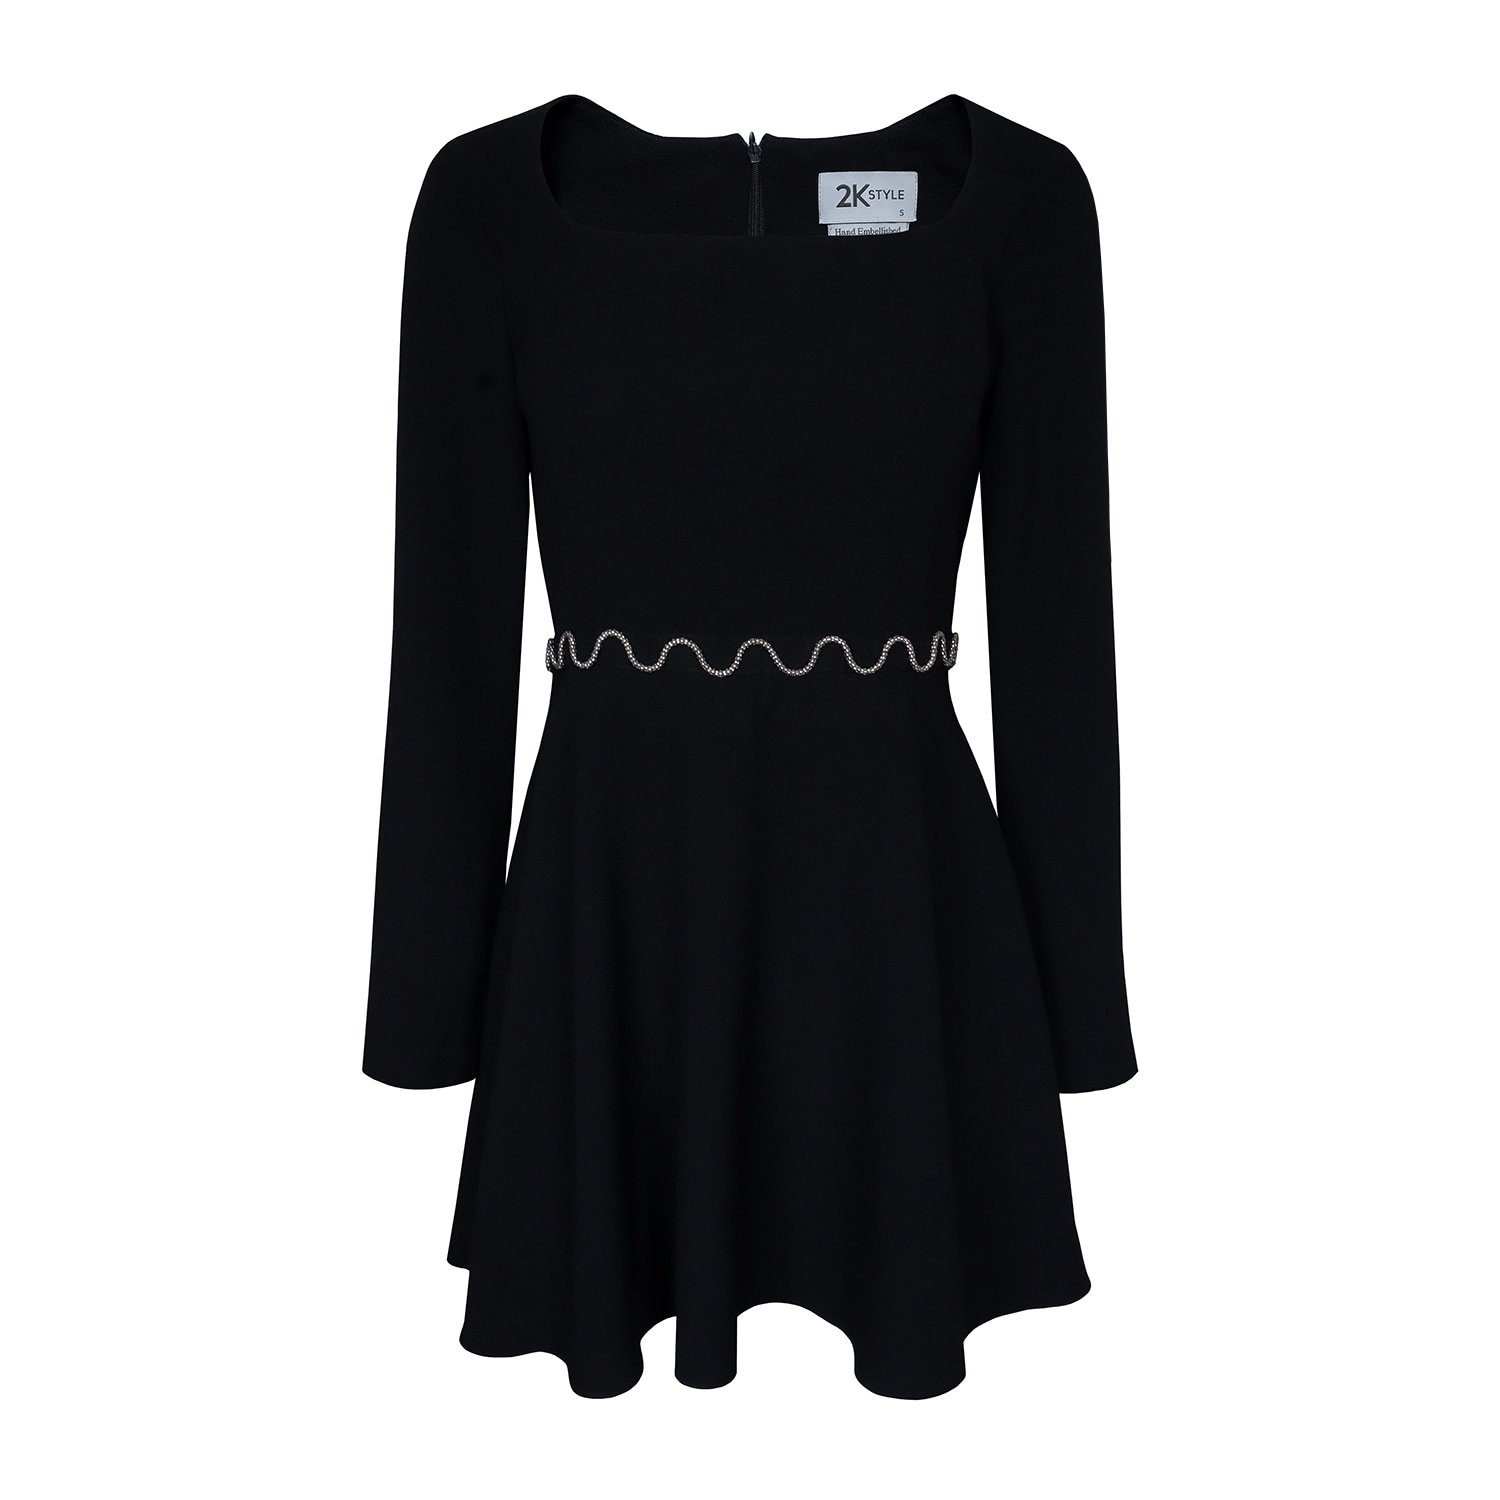 Women’s Brigitte Chain-Embellished Crepe Mini Dress - Black Small 2Kstyle